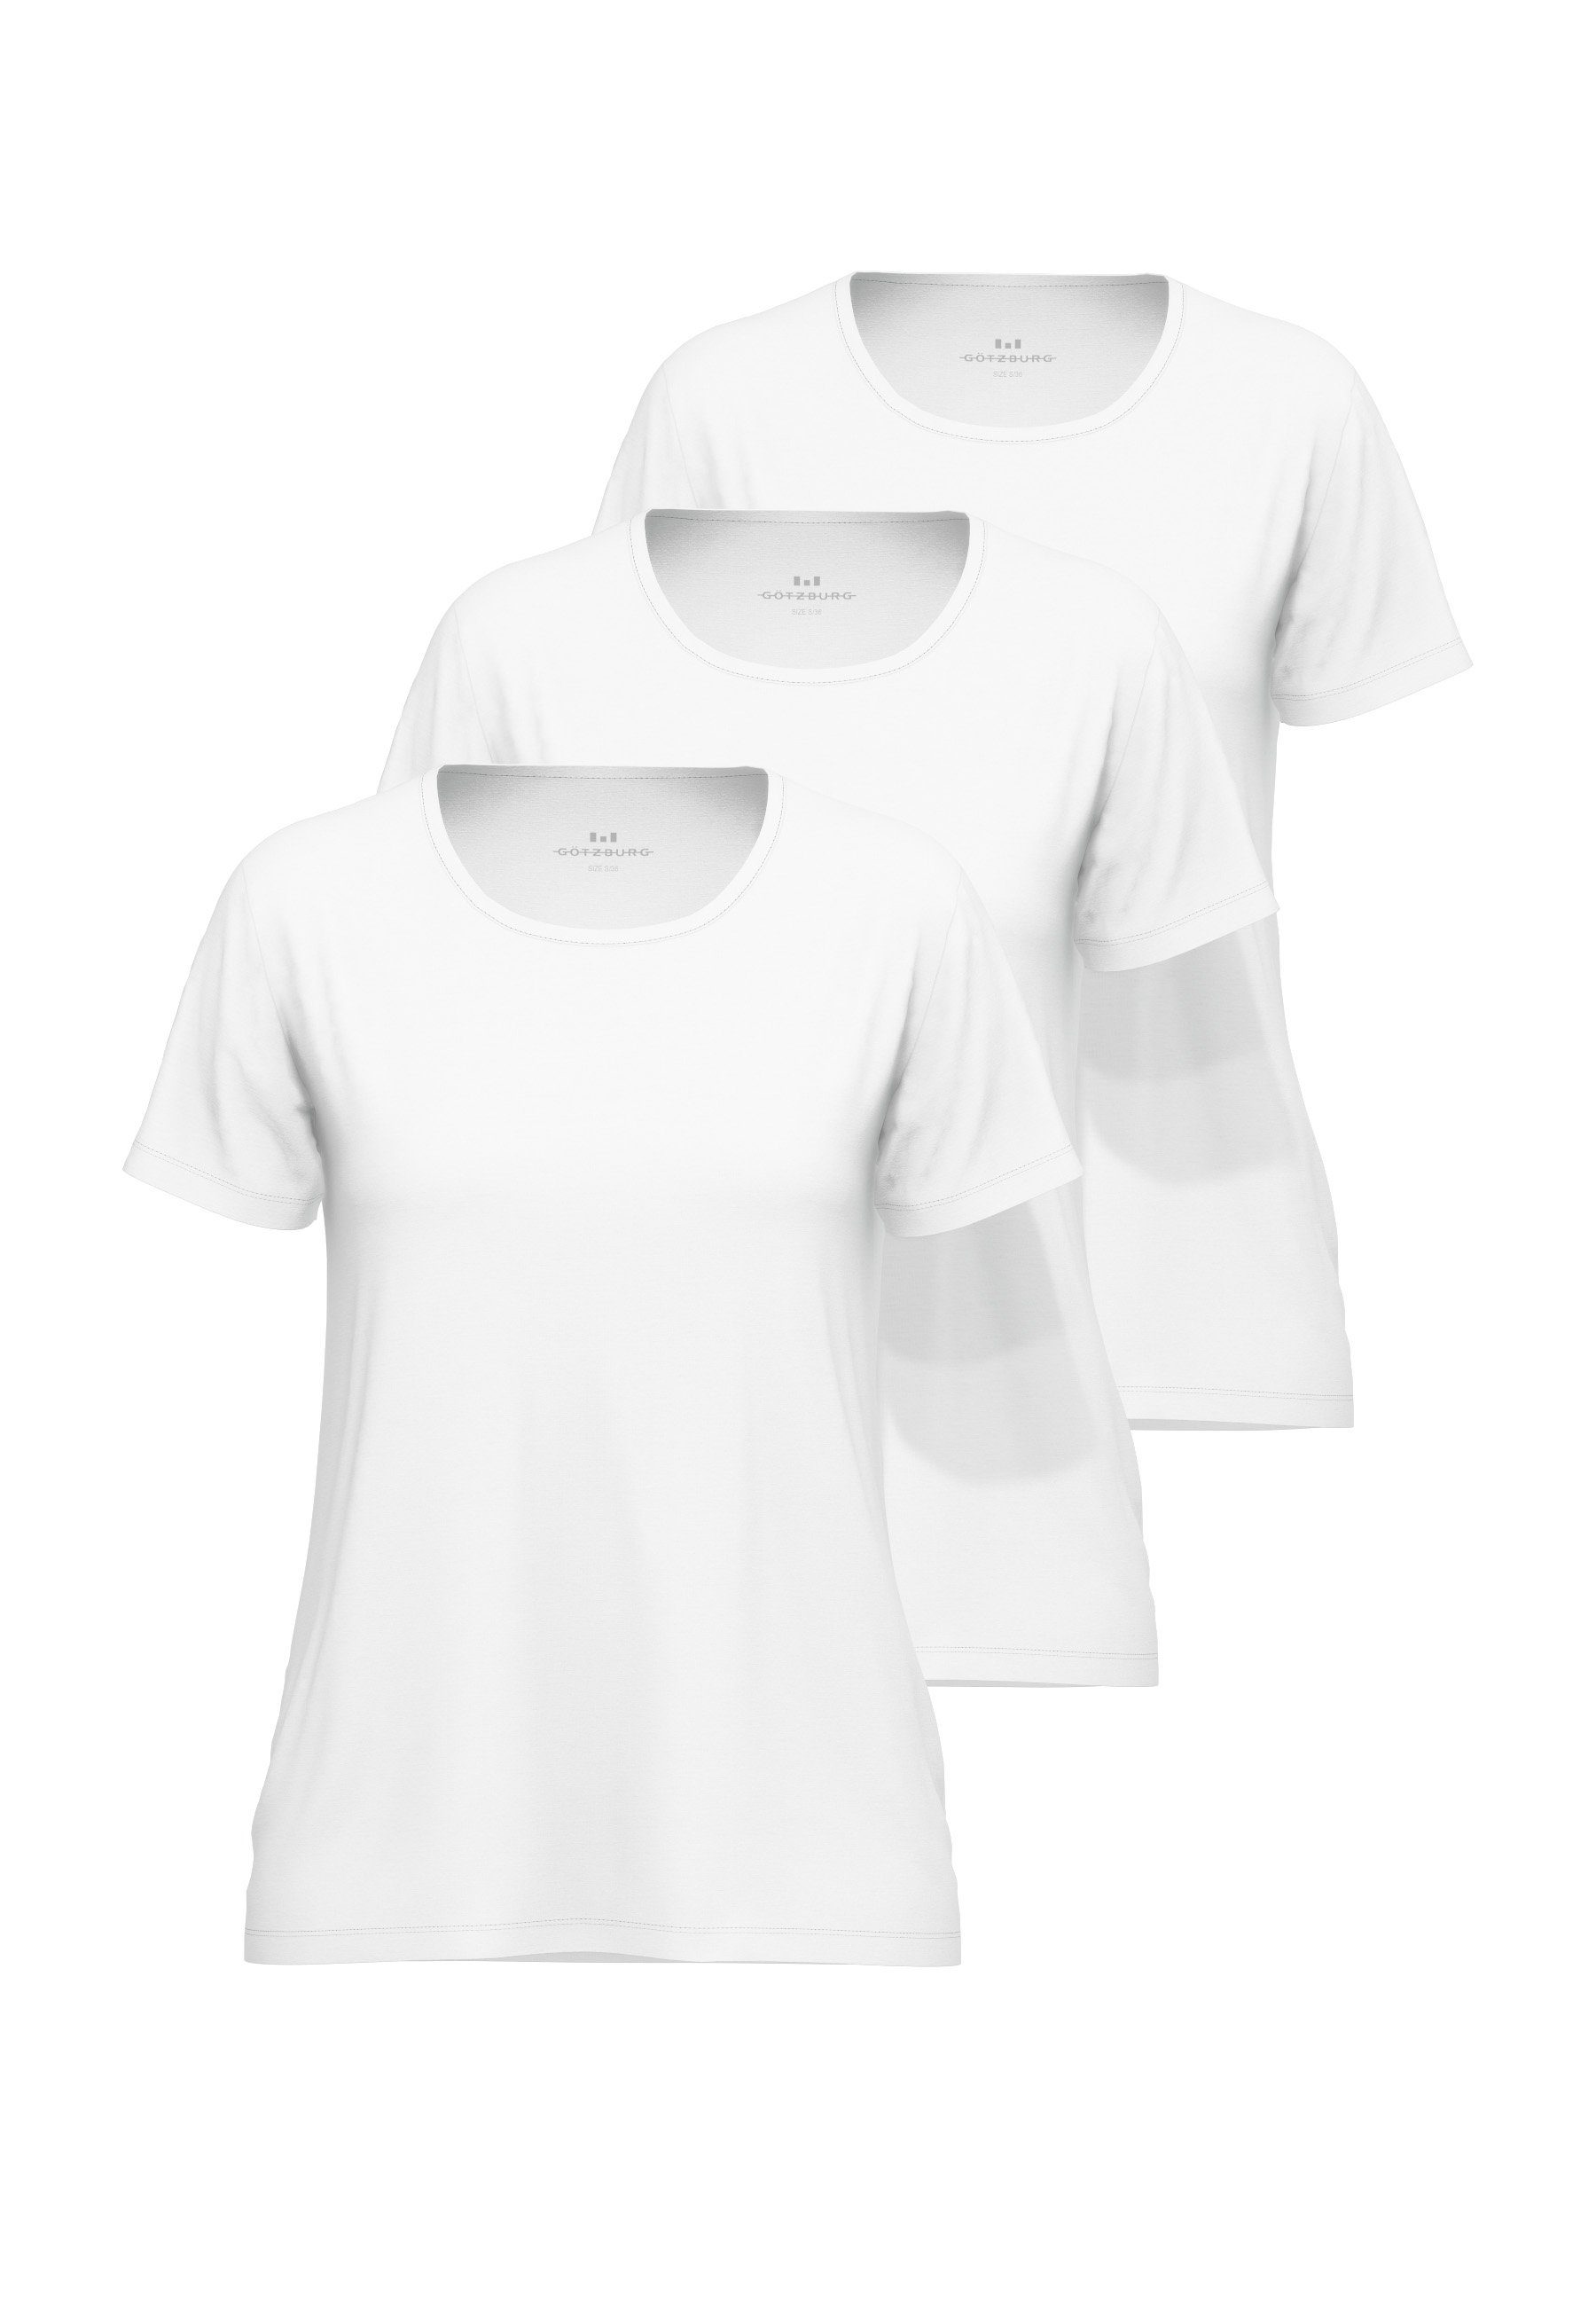 GÖTZBURG Unterziehshirt GÖTZBURG Damen Shirt weiß uni 3er Pack (3-St) weiß-hell-uni